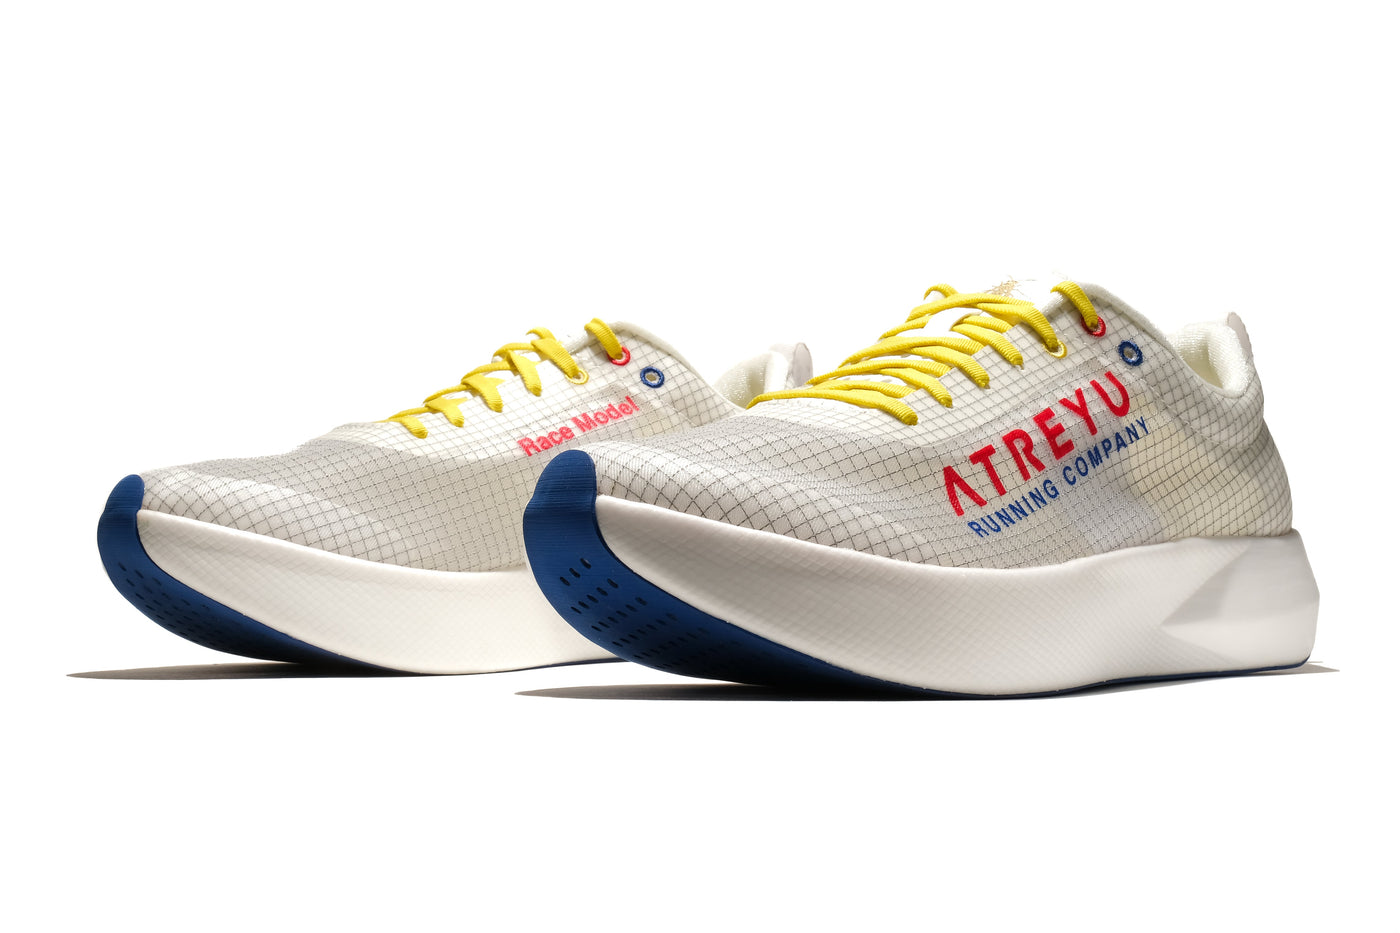 Atreyu Race Model - Carbon Plated Running Shoe Pair Two